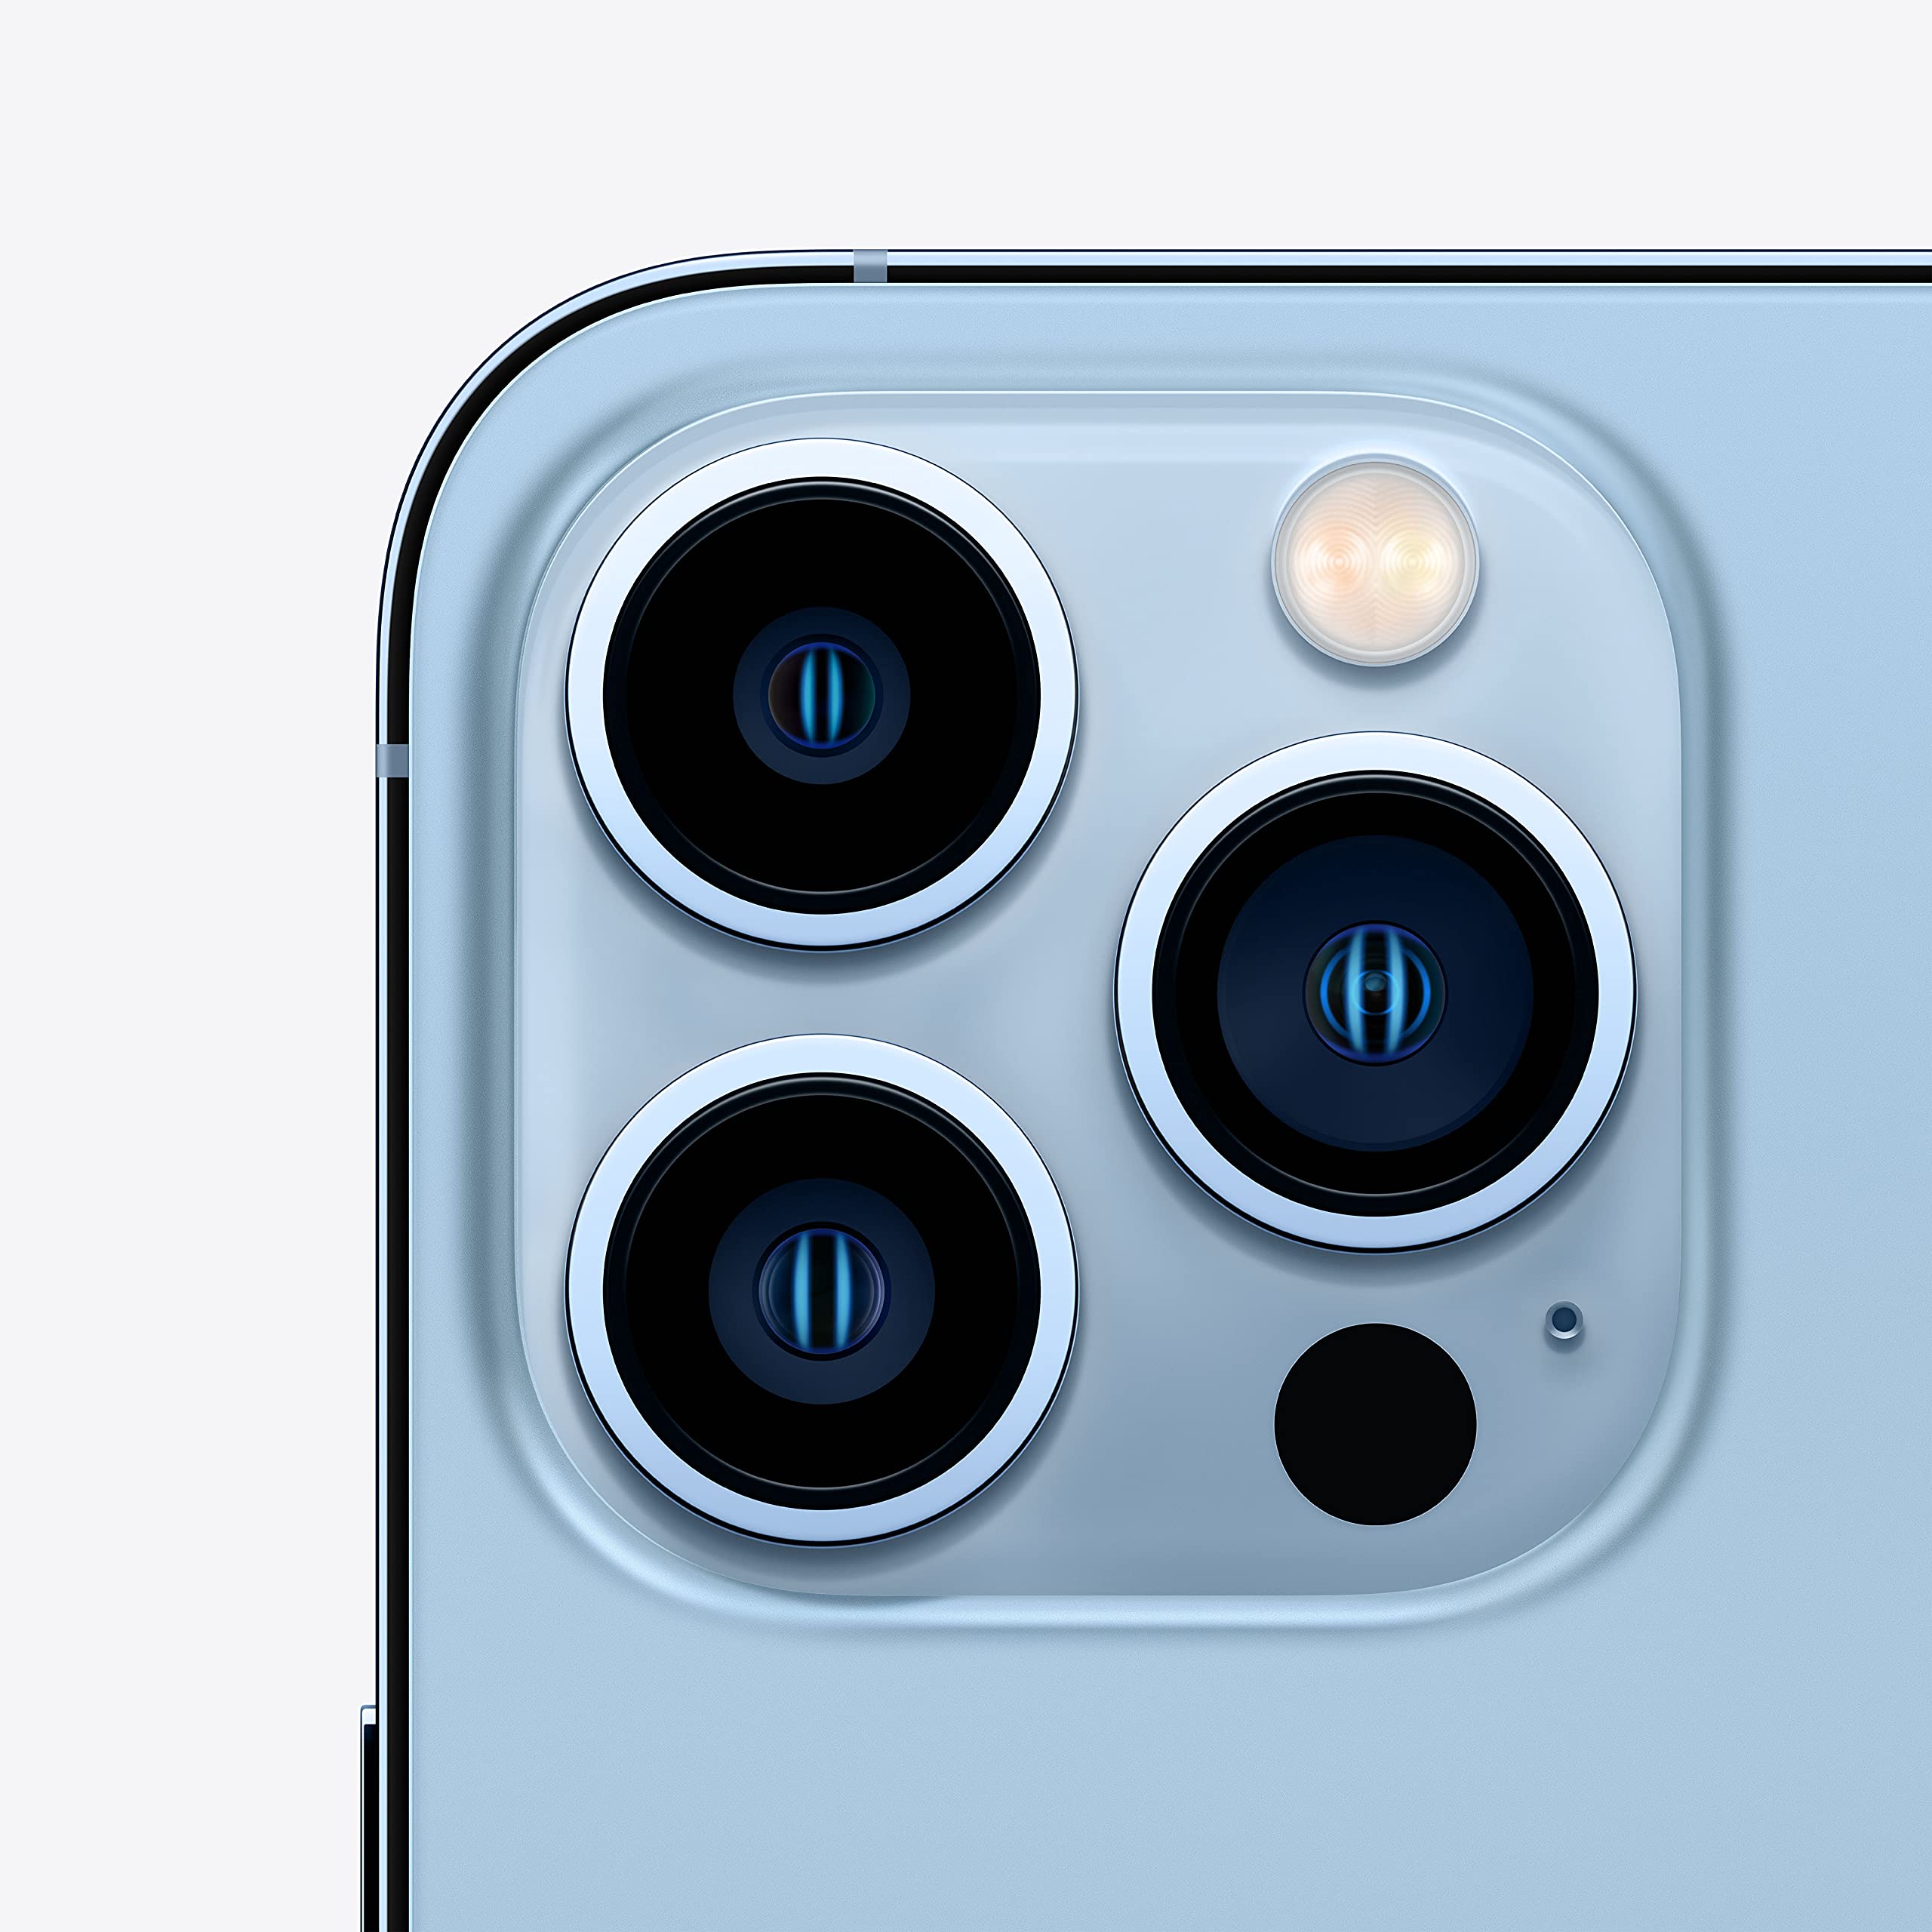 Apple iPhone 13 Pro Max (512GB) - Sierra Blue